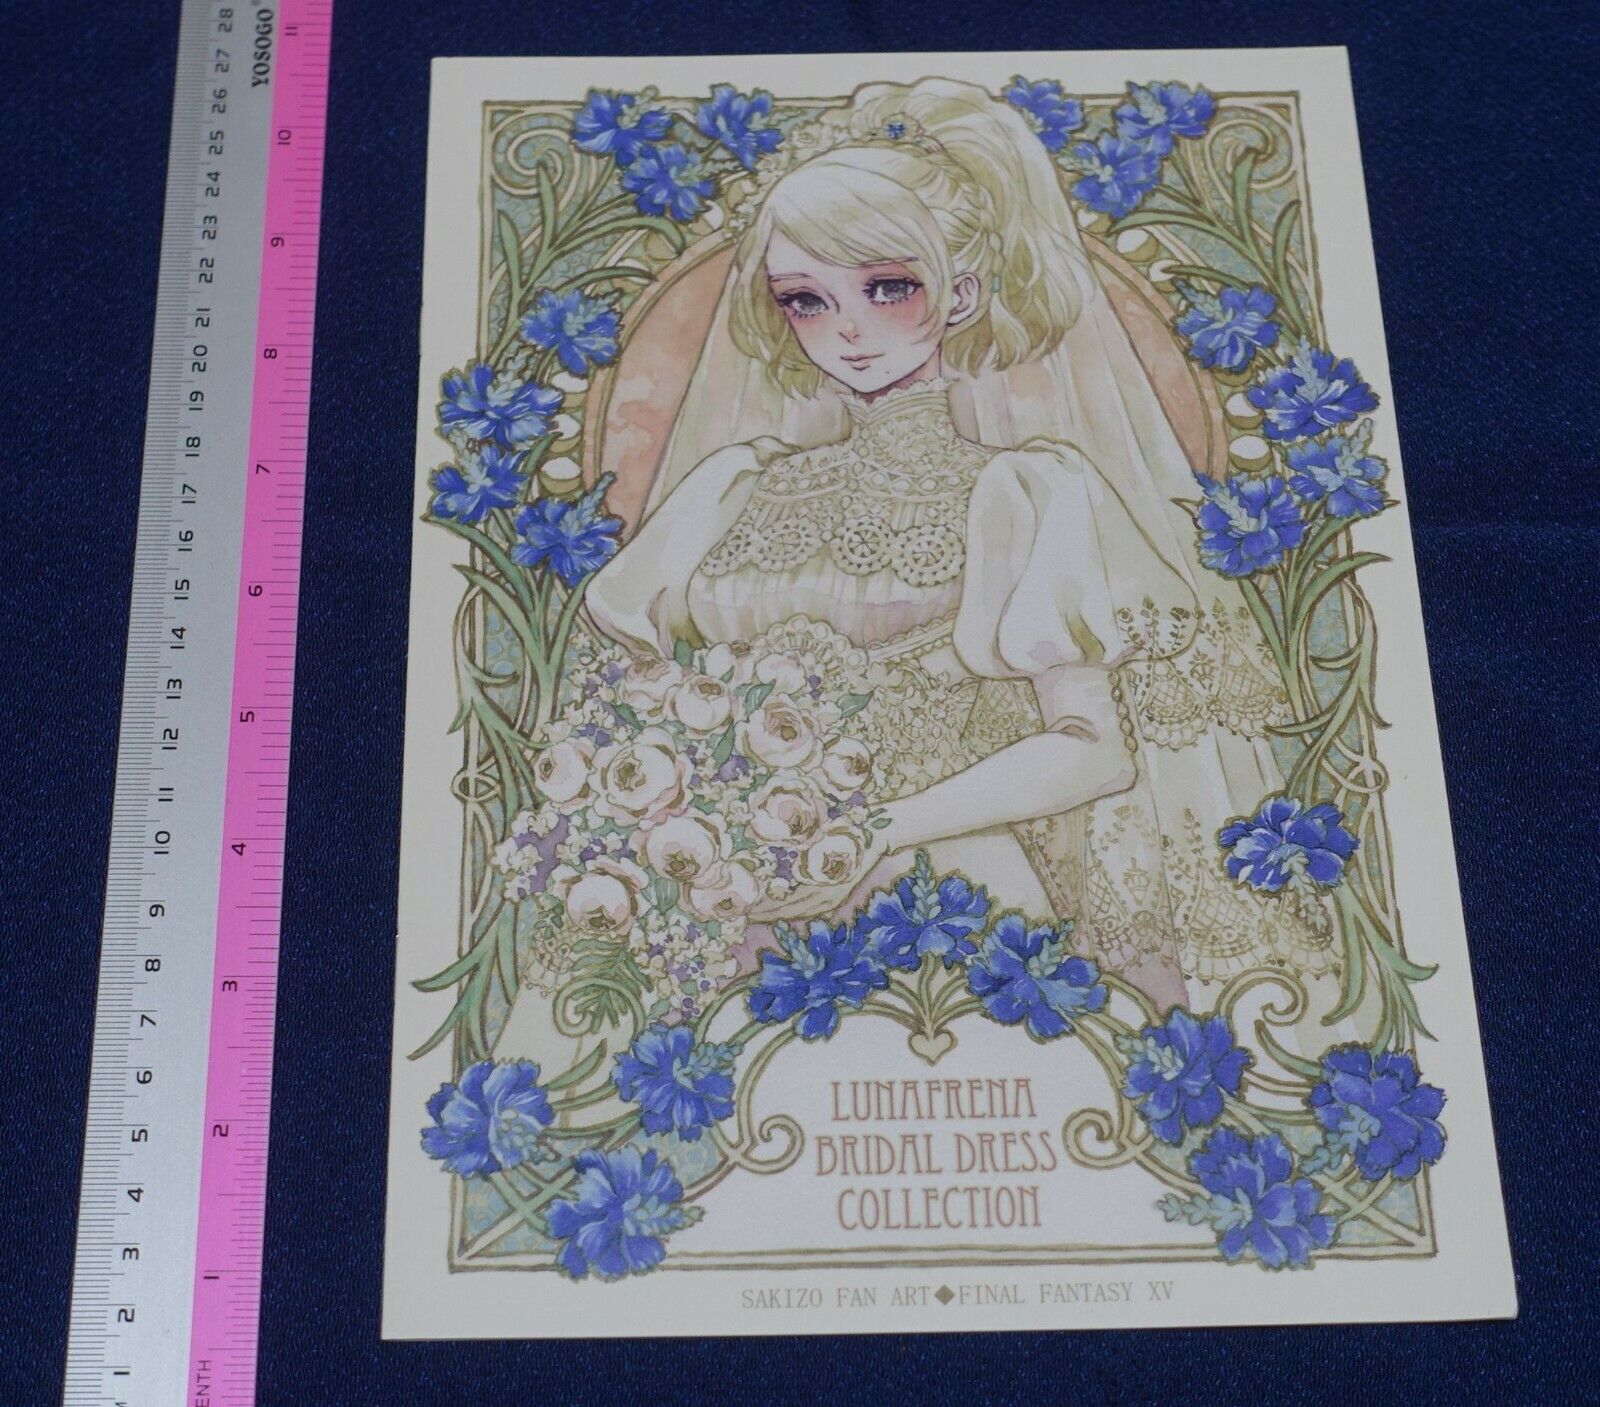 Sakizo FF15 Fan Art Book LUNAFRENA BRIDAL DRESS COLLECTION ART BOOK 